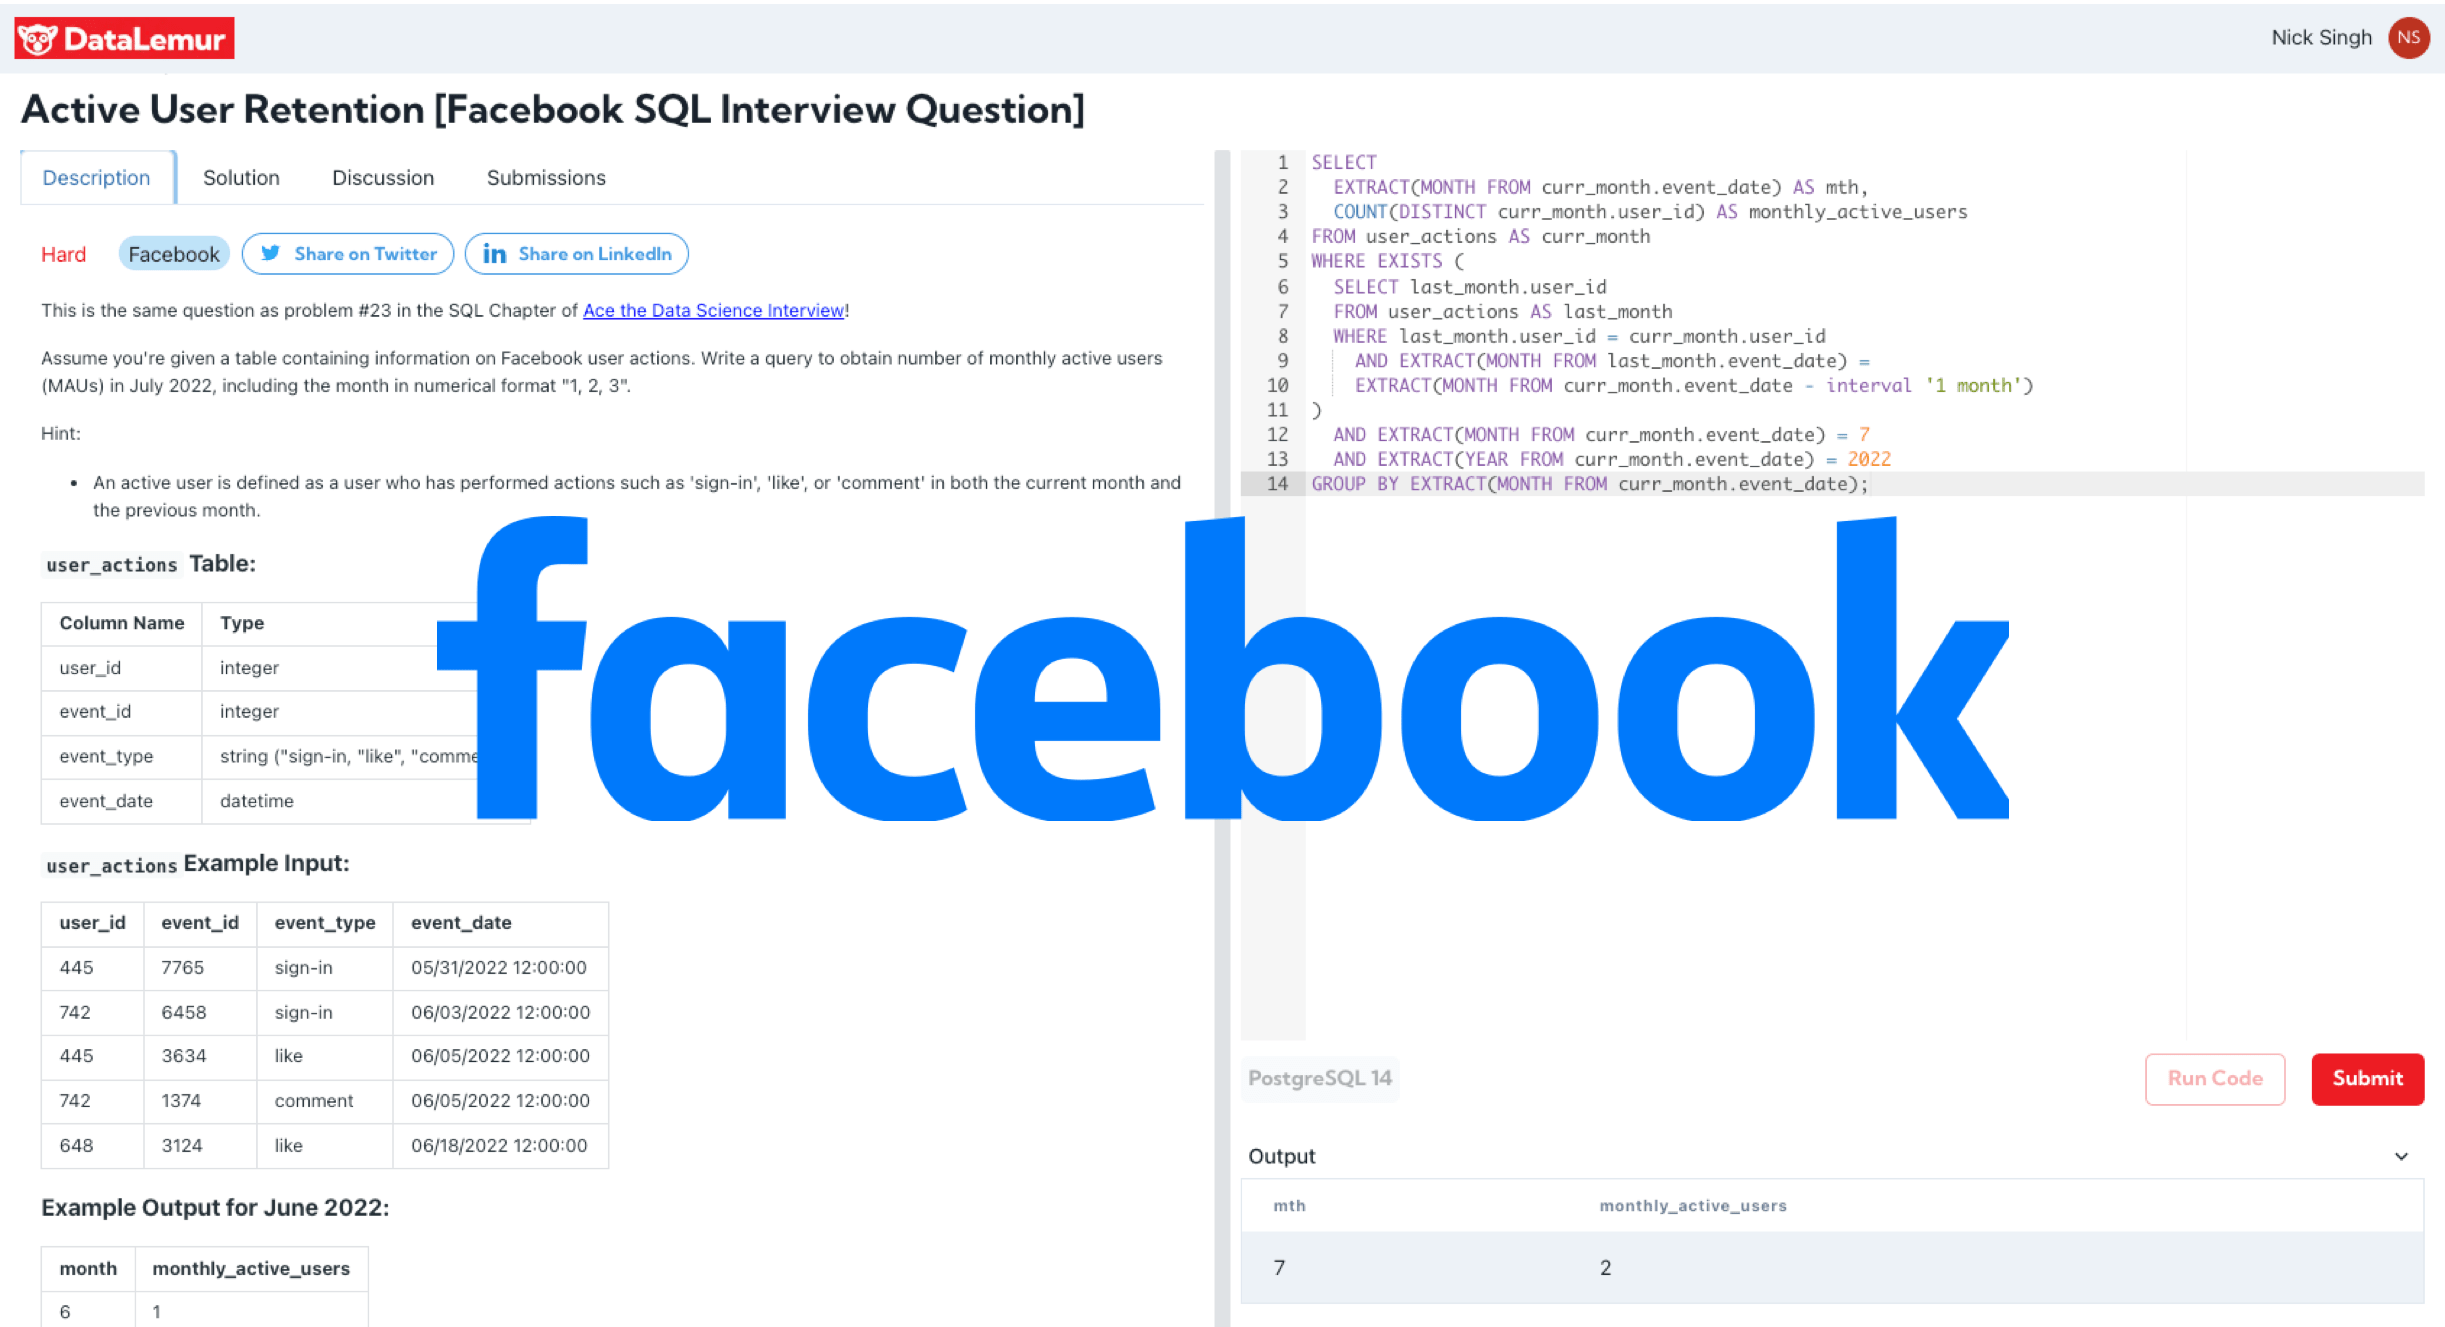 Active User Retention: Facebook SQL Interview Question